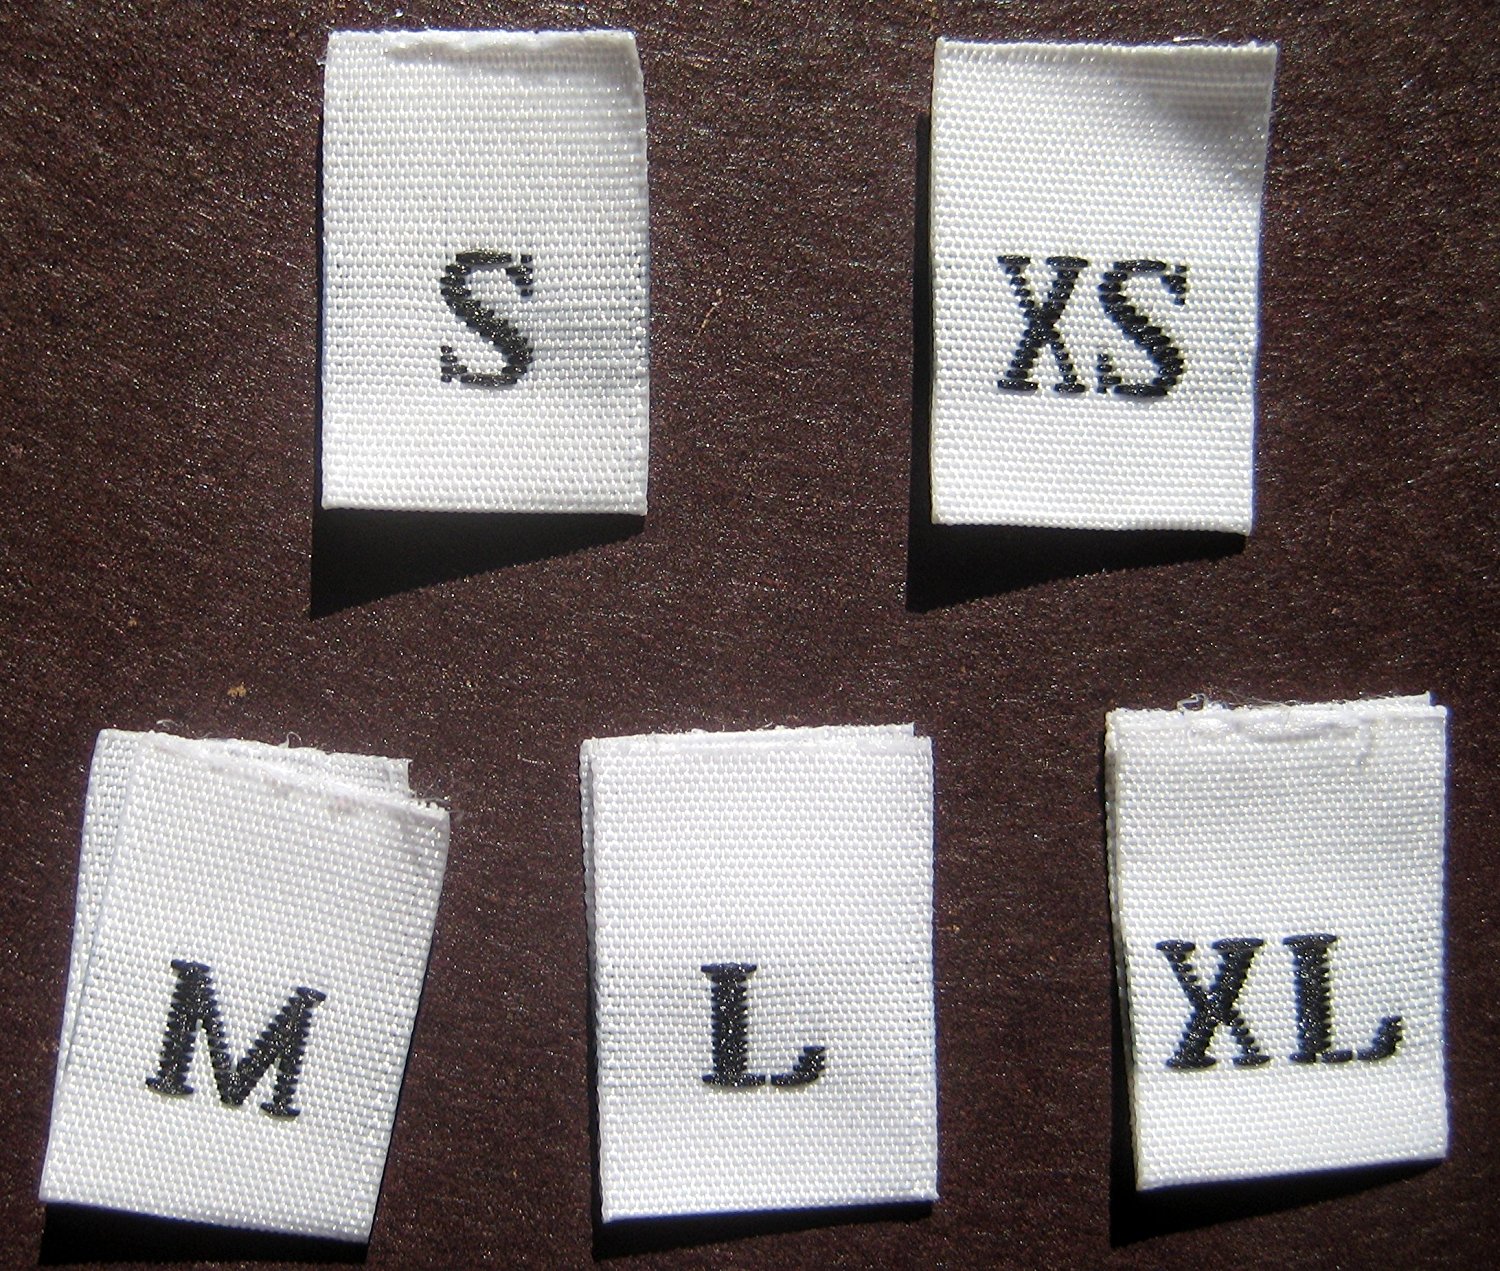 500 pcs WOVEN CLOTHING LABELS SIZE TAGS WHITE - XS S M L XL (100pcs each)